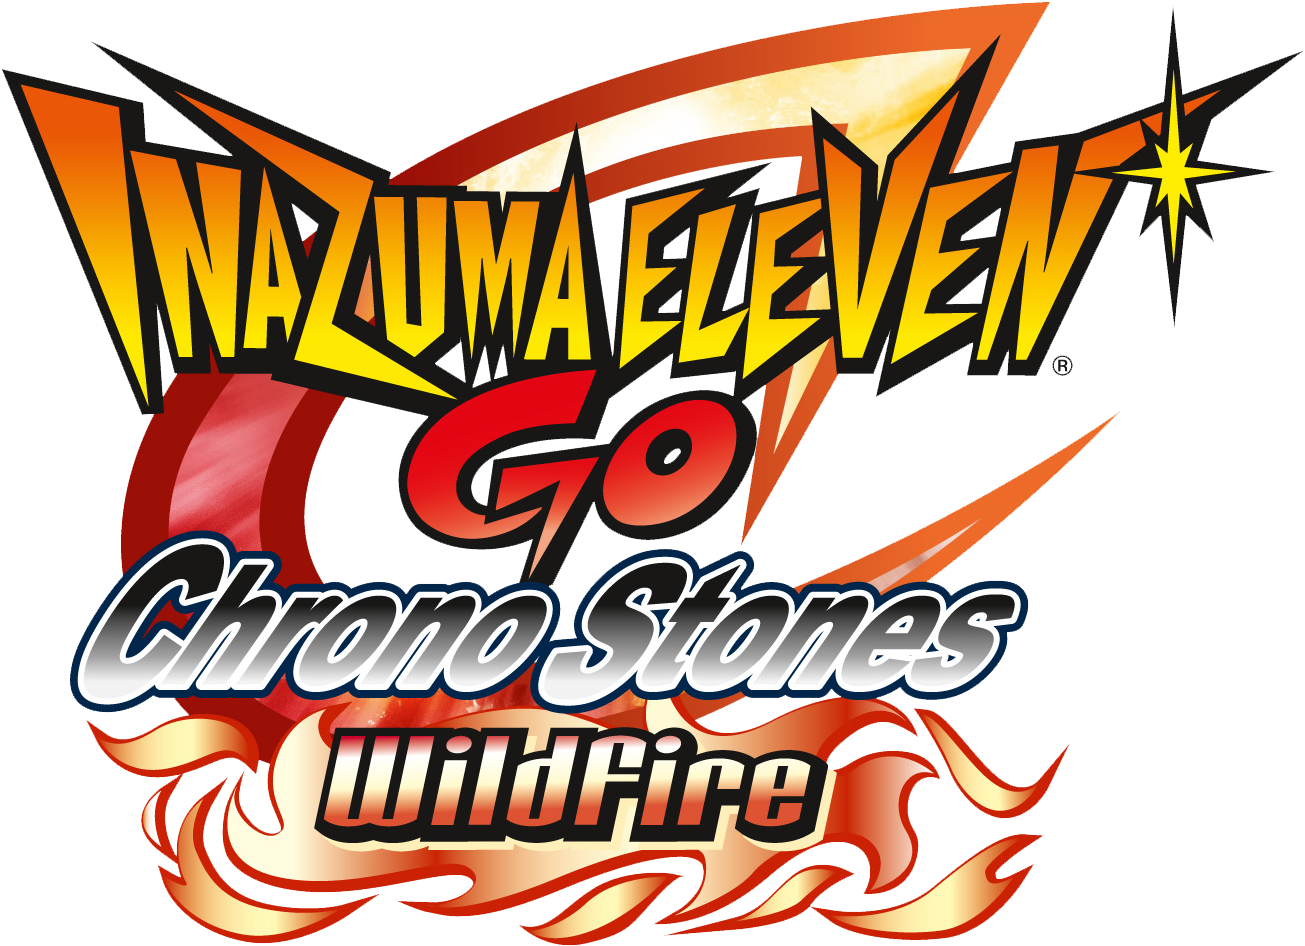 Inazuma Eleven Go Chrono Stones Thunderflash Wildfire - Inazuma Eleven Go Chrono Stone Wildfire Logo (1328x980)